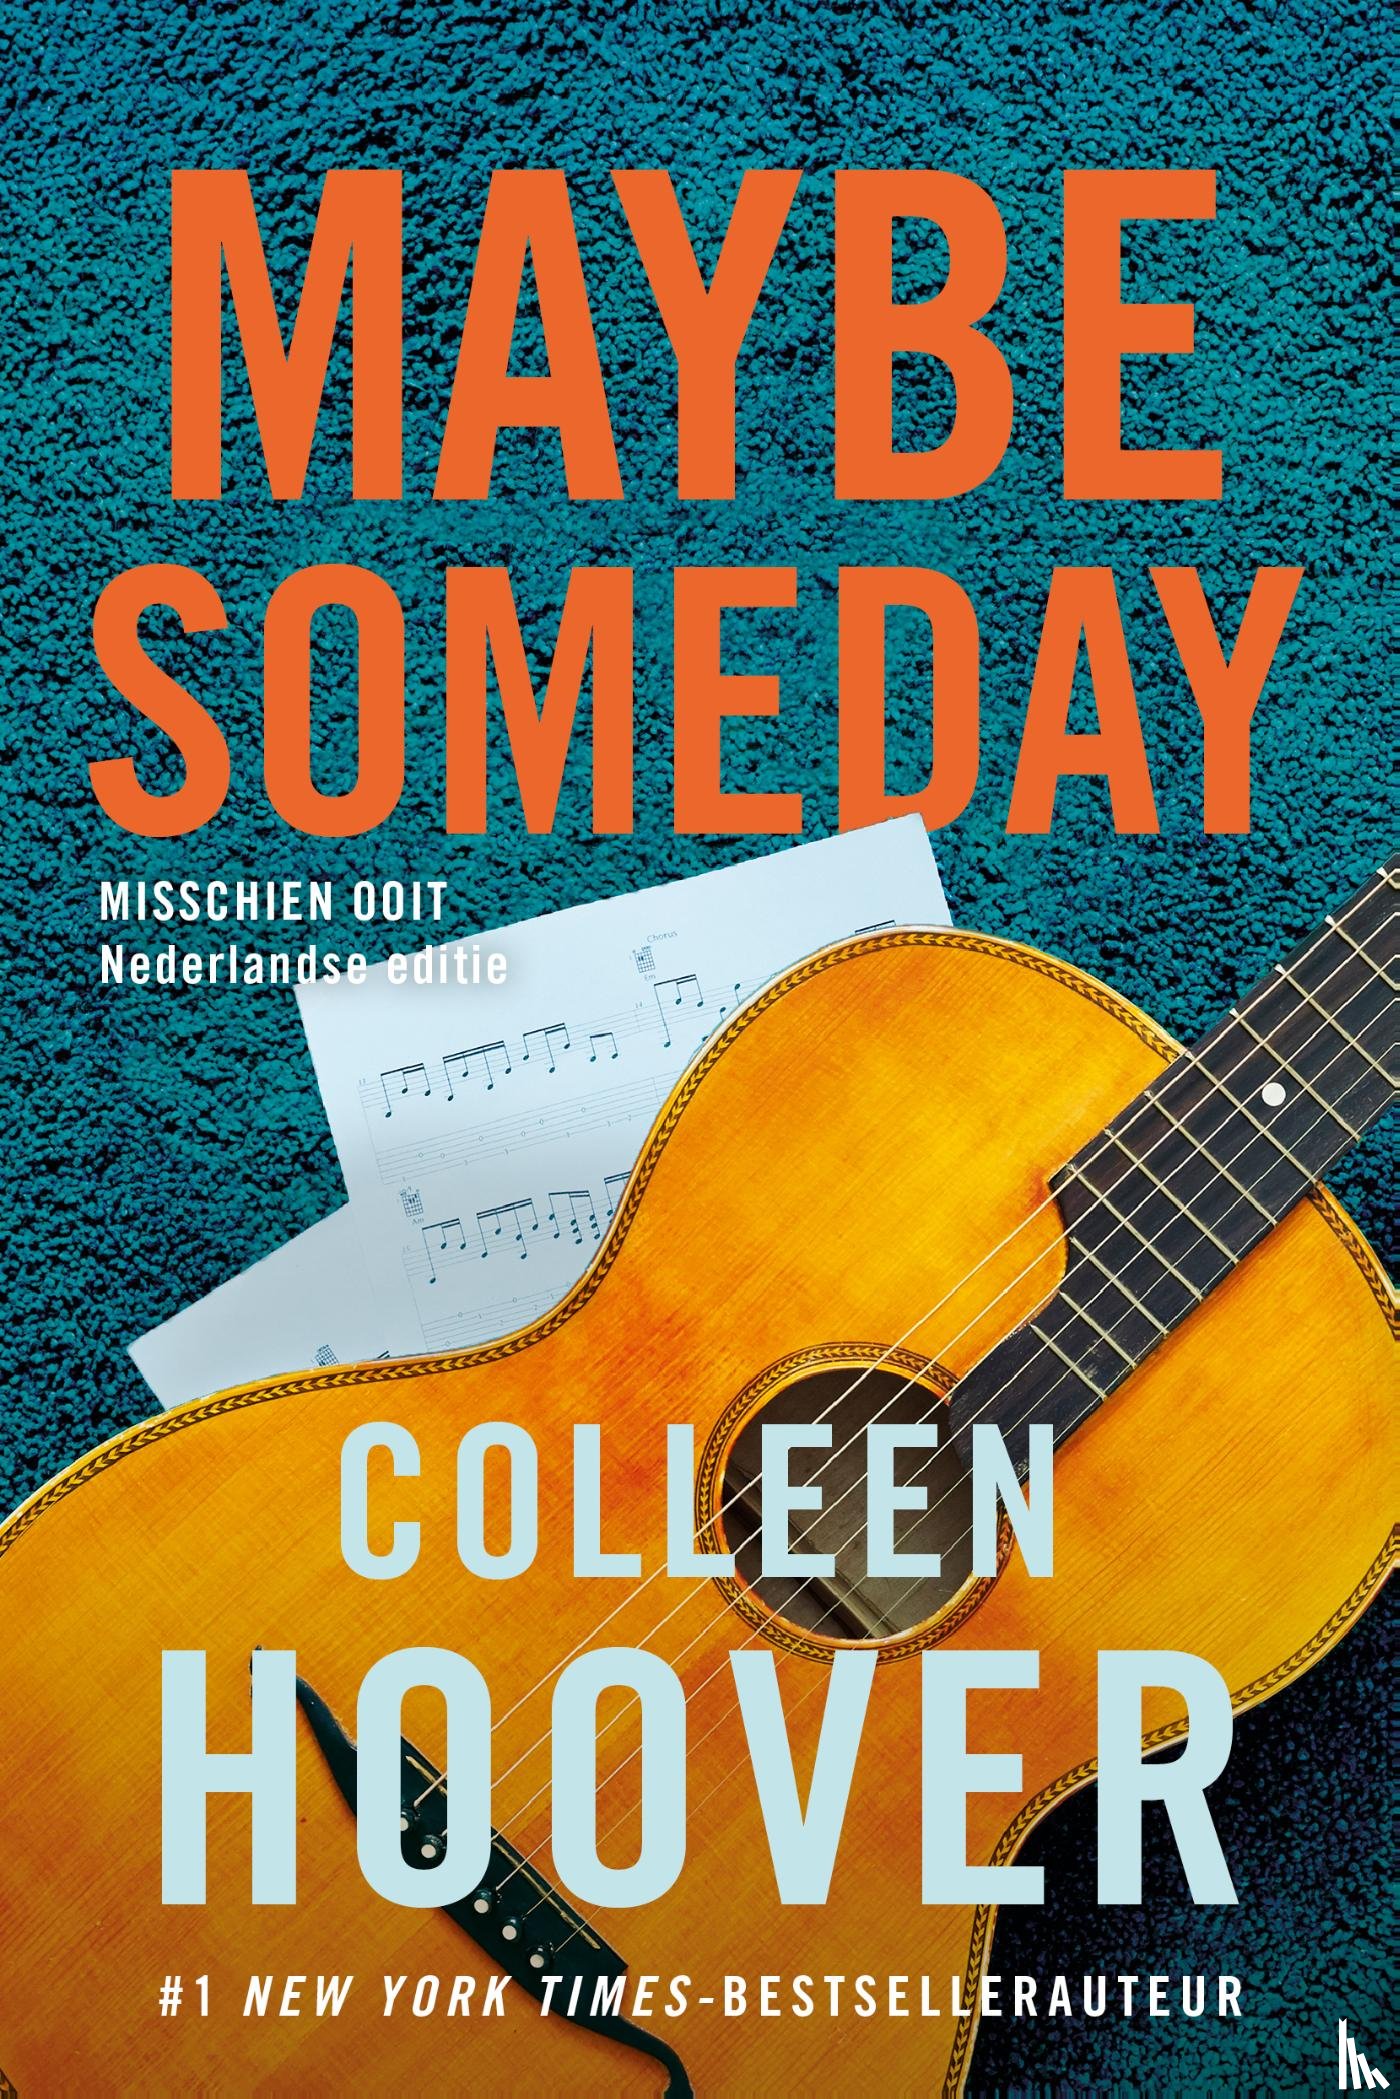 Hoover, Colleen - Maybe someday - Misschien ooit